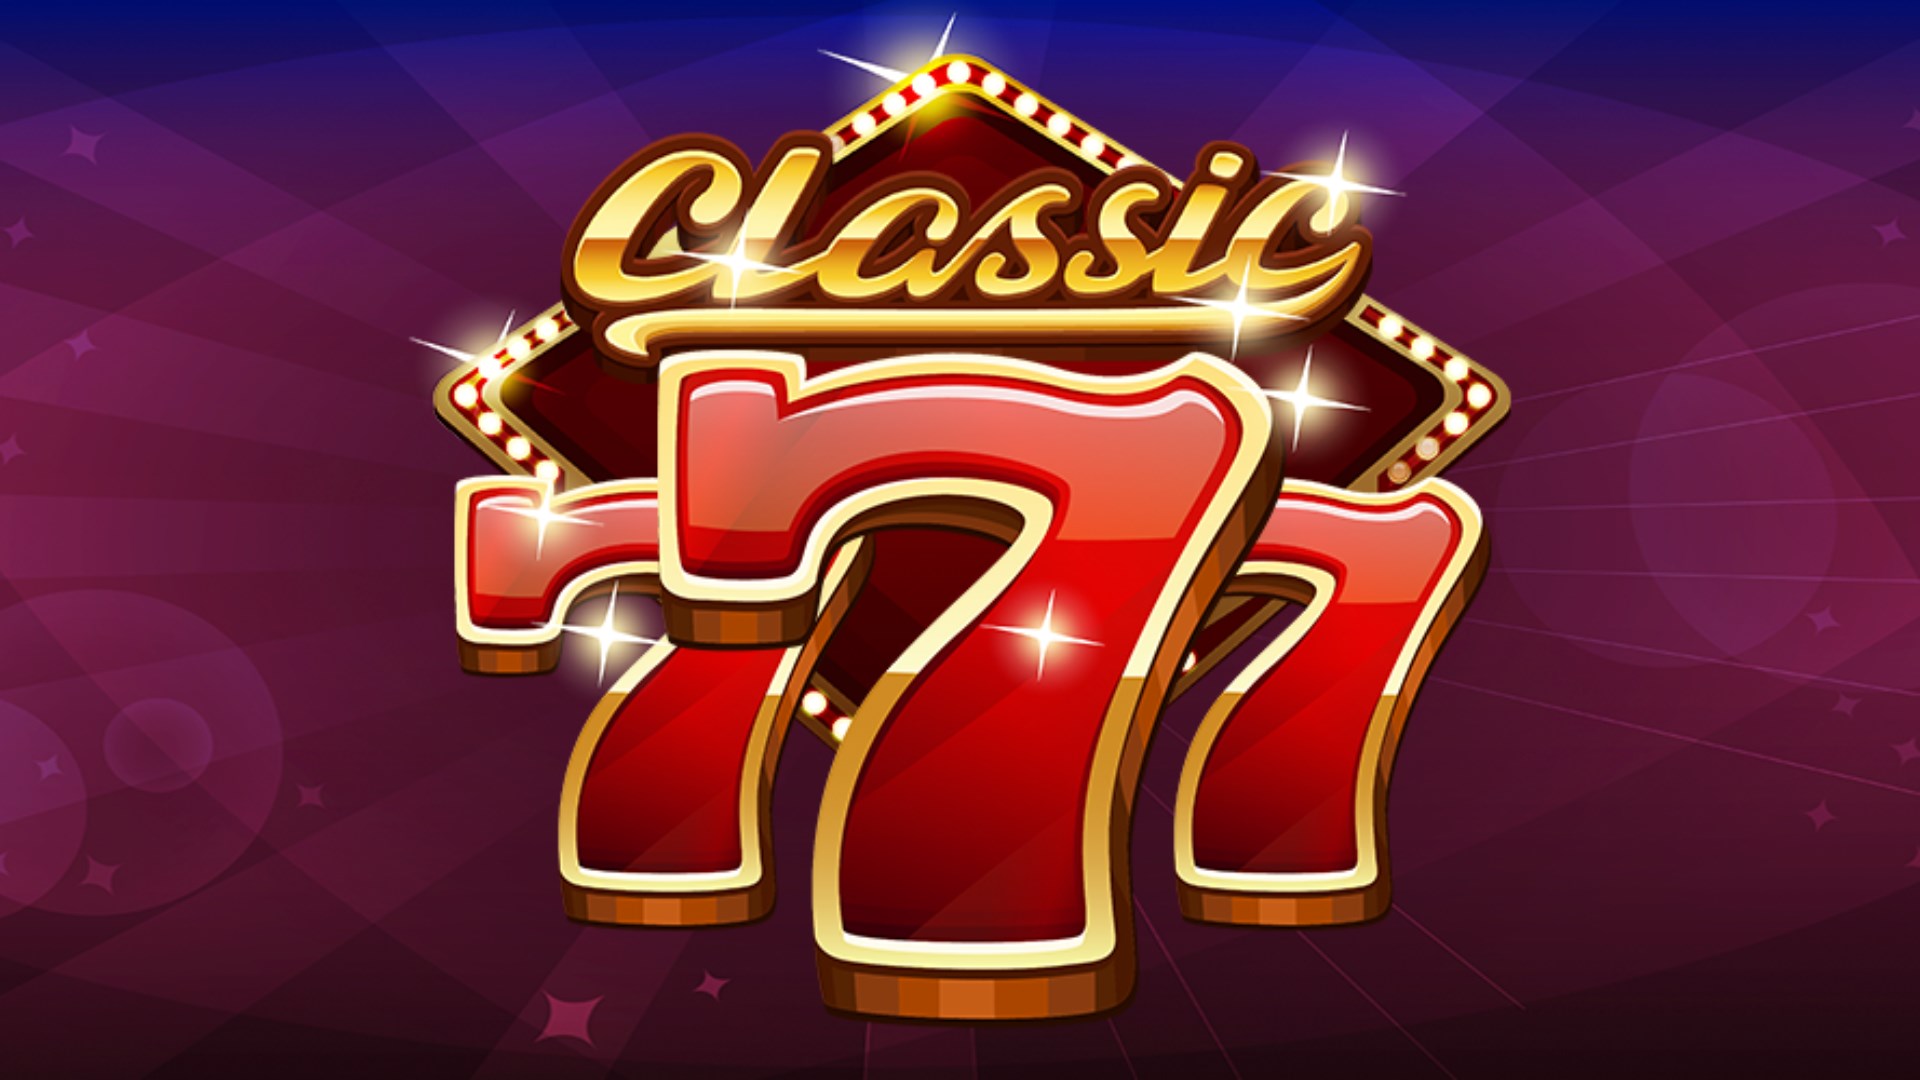 Free 777 slot machine games